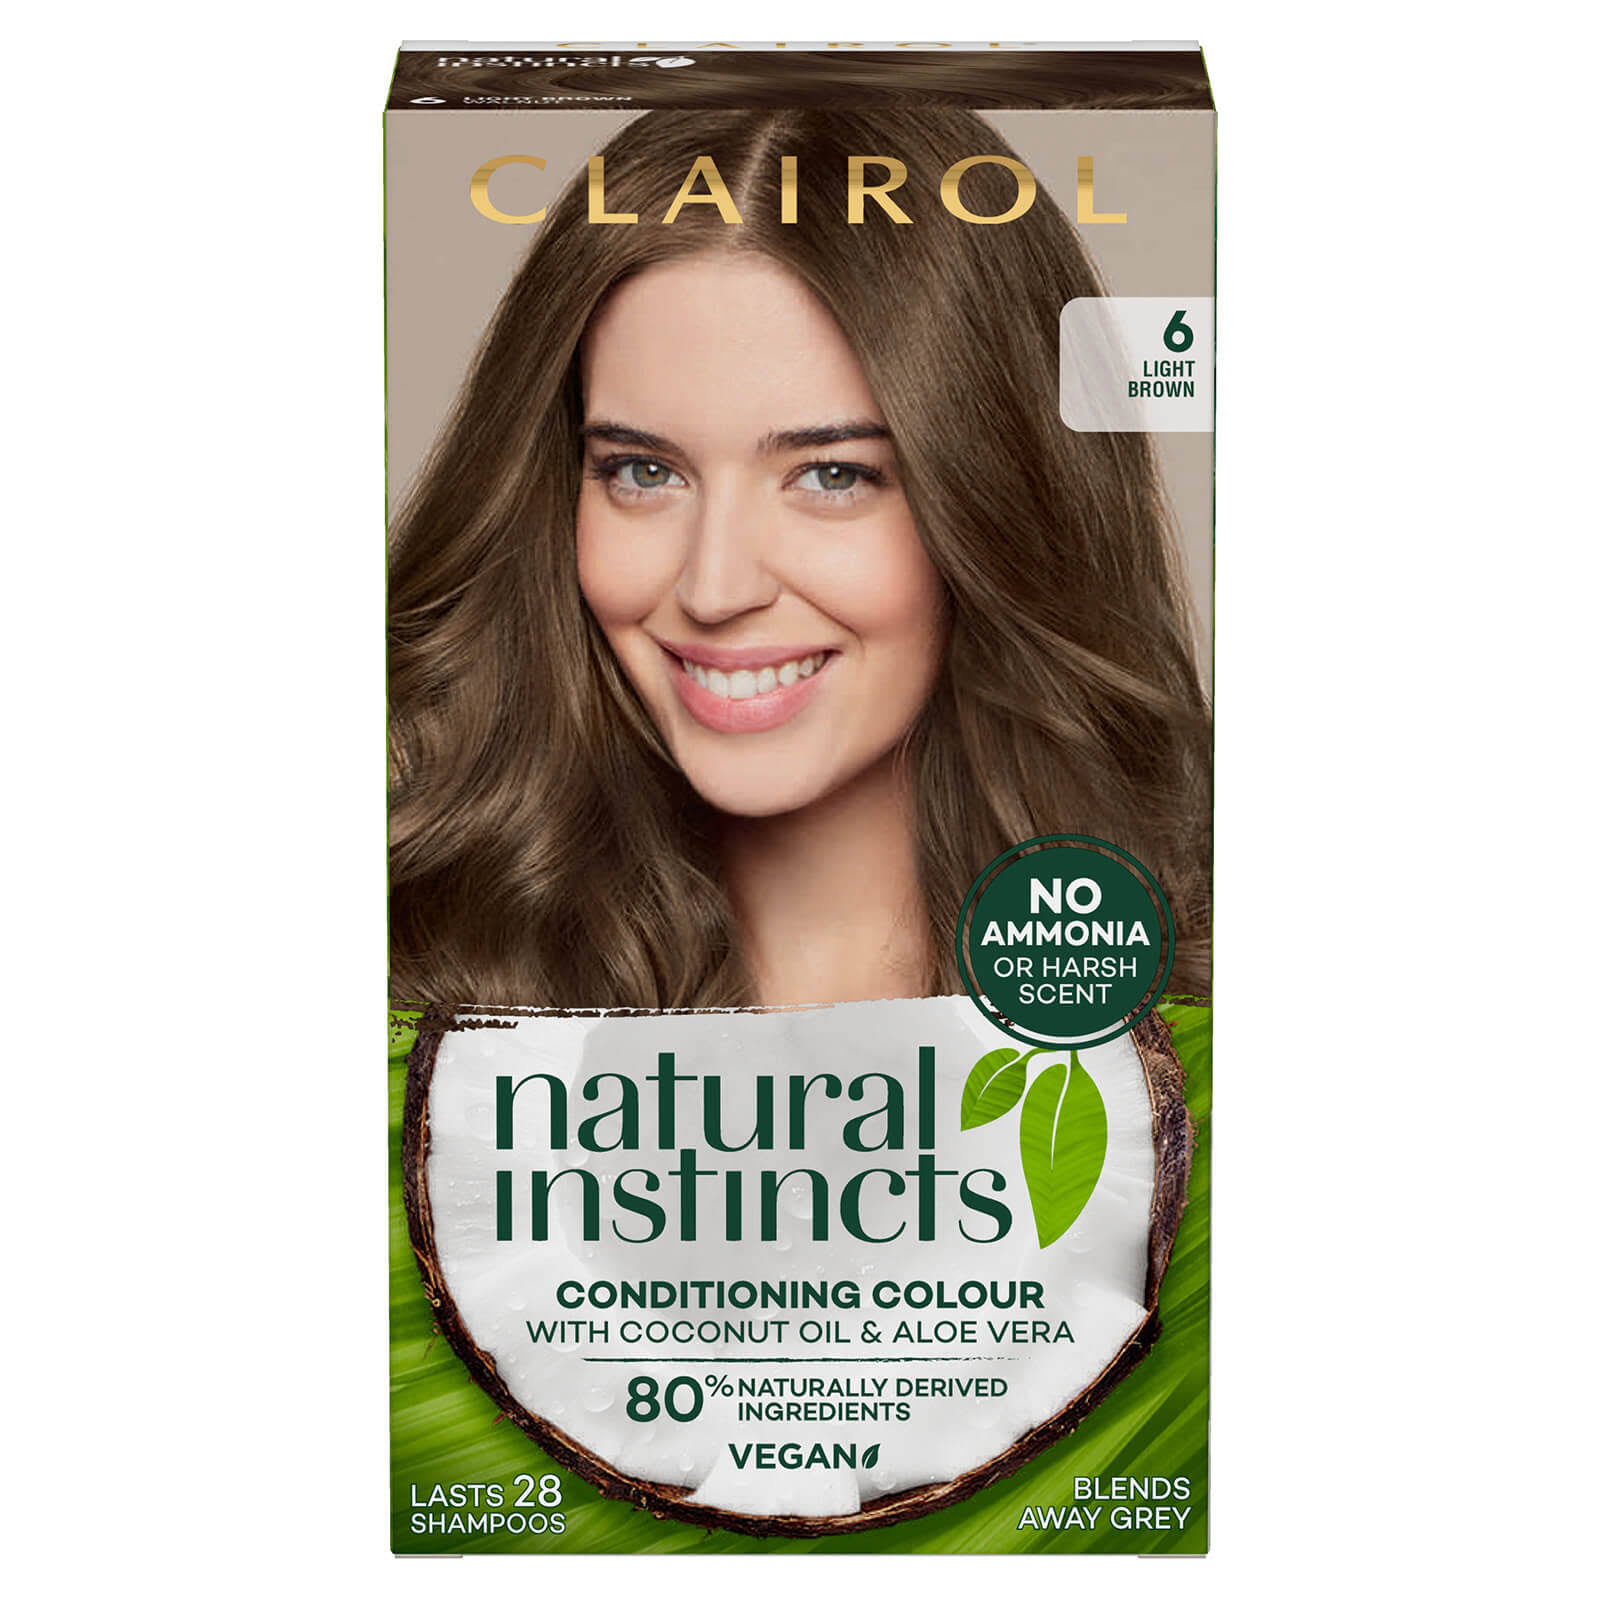 Clairol Natural Instincts Semi-Permanent No Ammonia Vegan Hair Dye 177ml (Various Shades) - 6 Light Brown